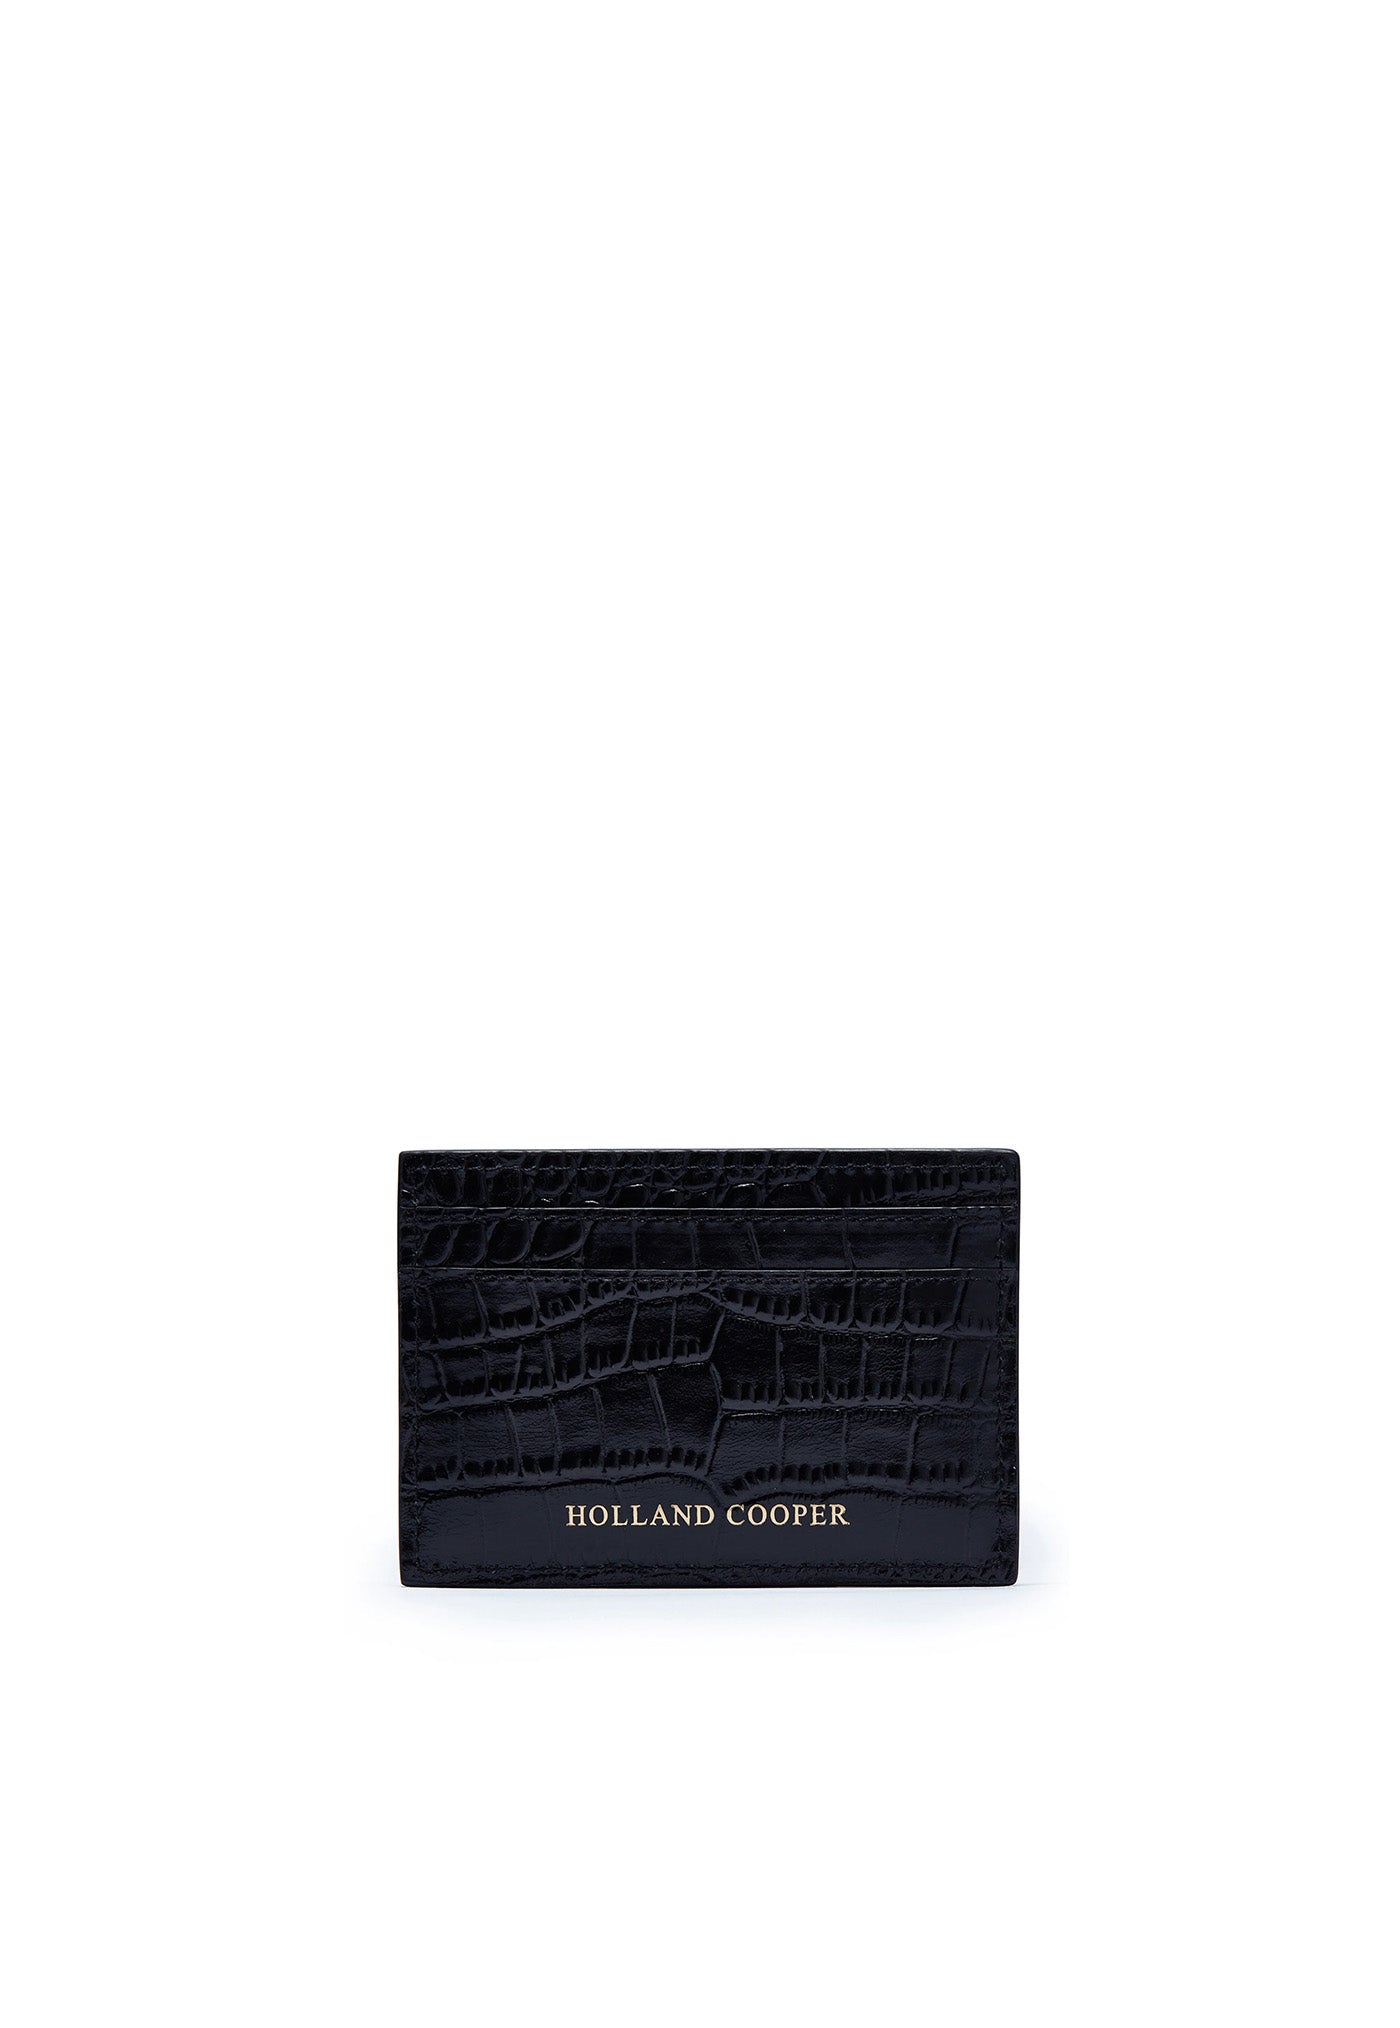 Chelsea Card Holder - Black Croc sold by Angel Divine